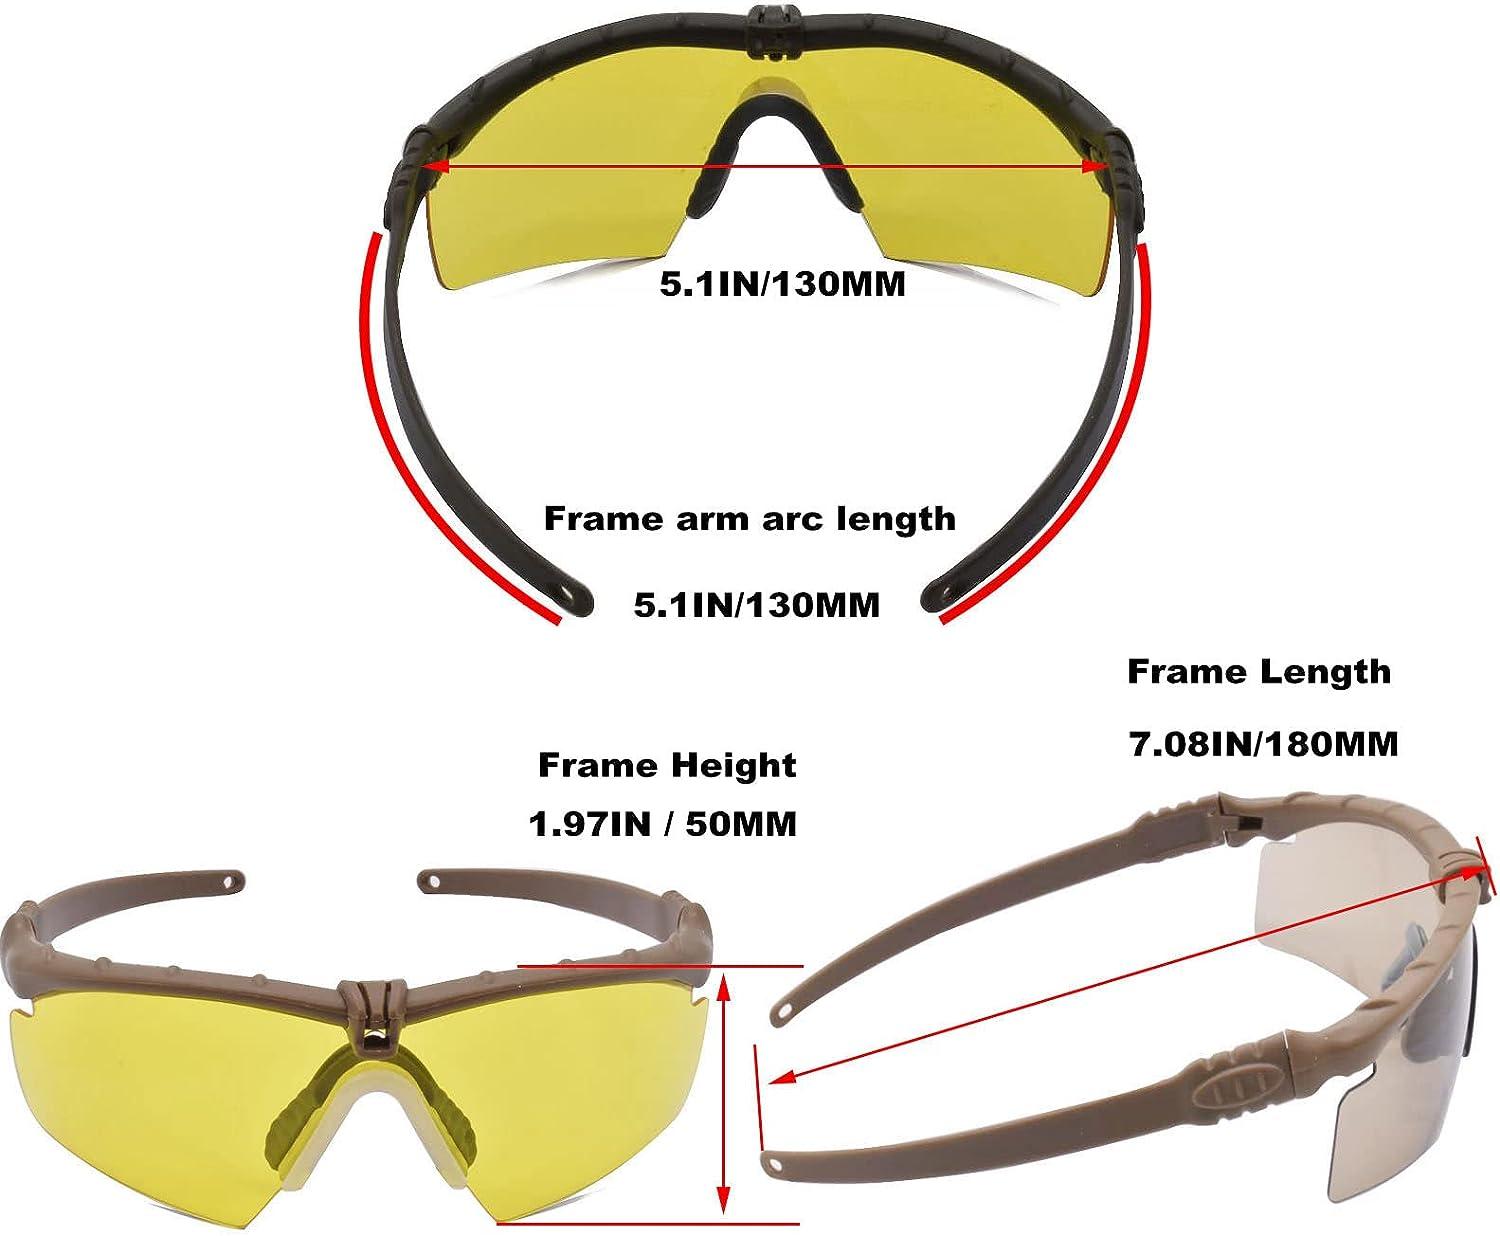 Hdlsina Tactical Eyewear Anti Fog Shooting Safety Glasses for Men